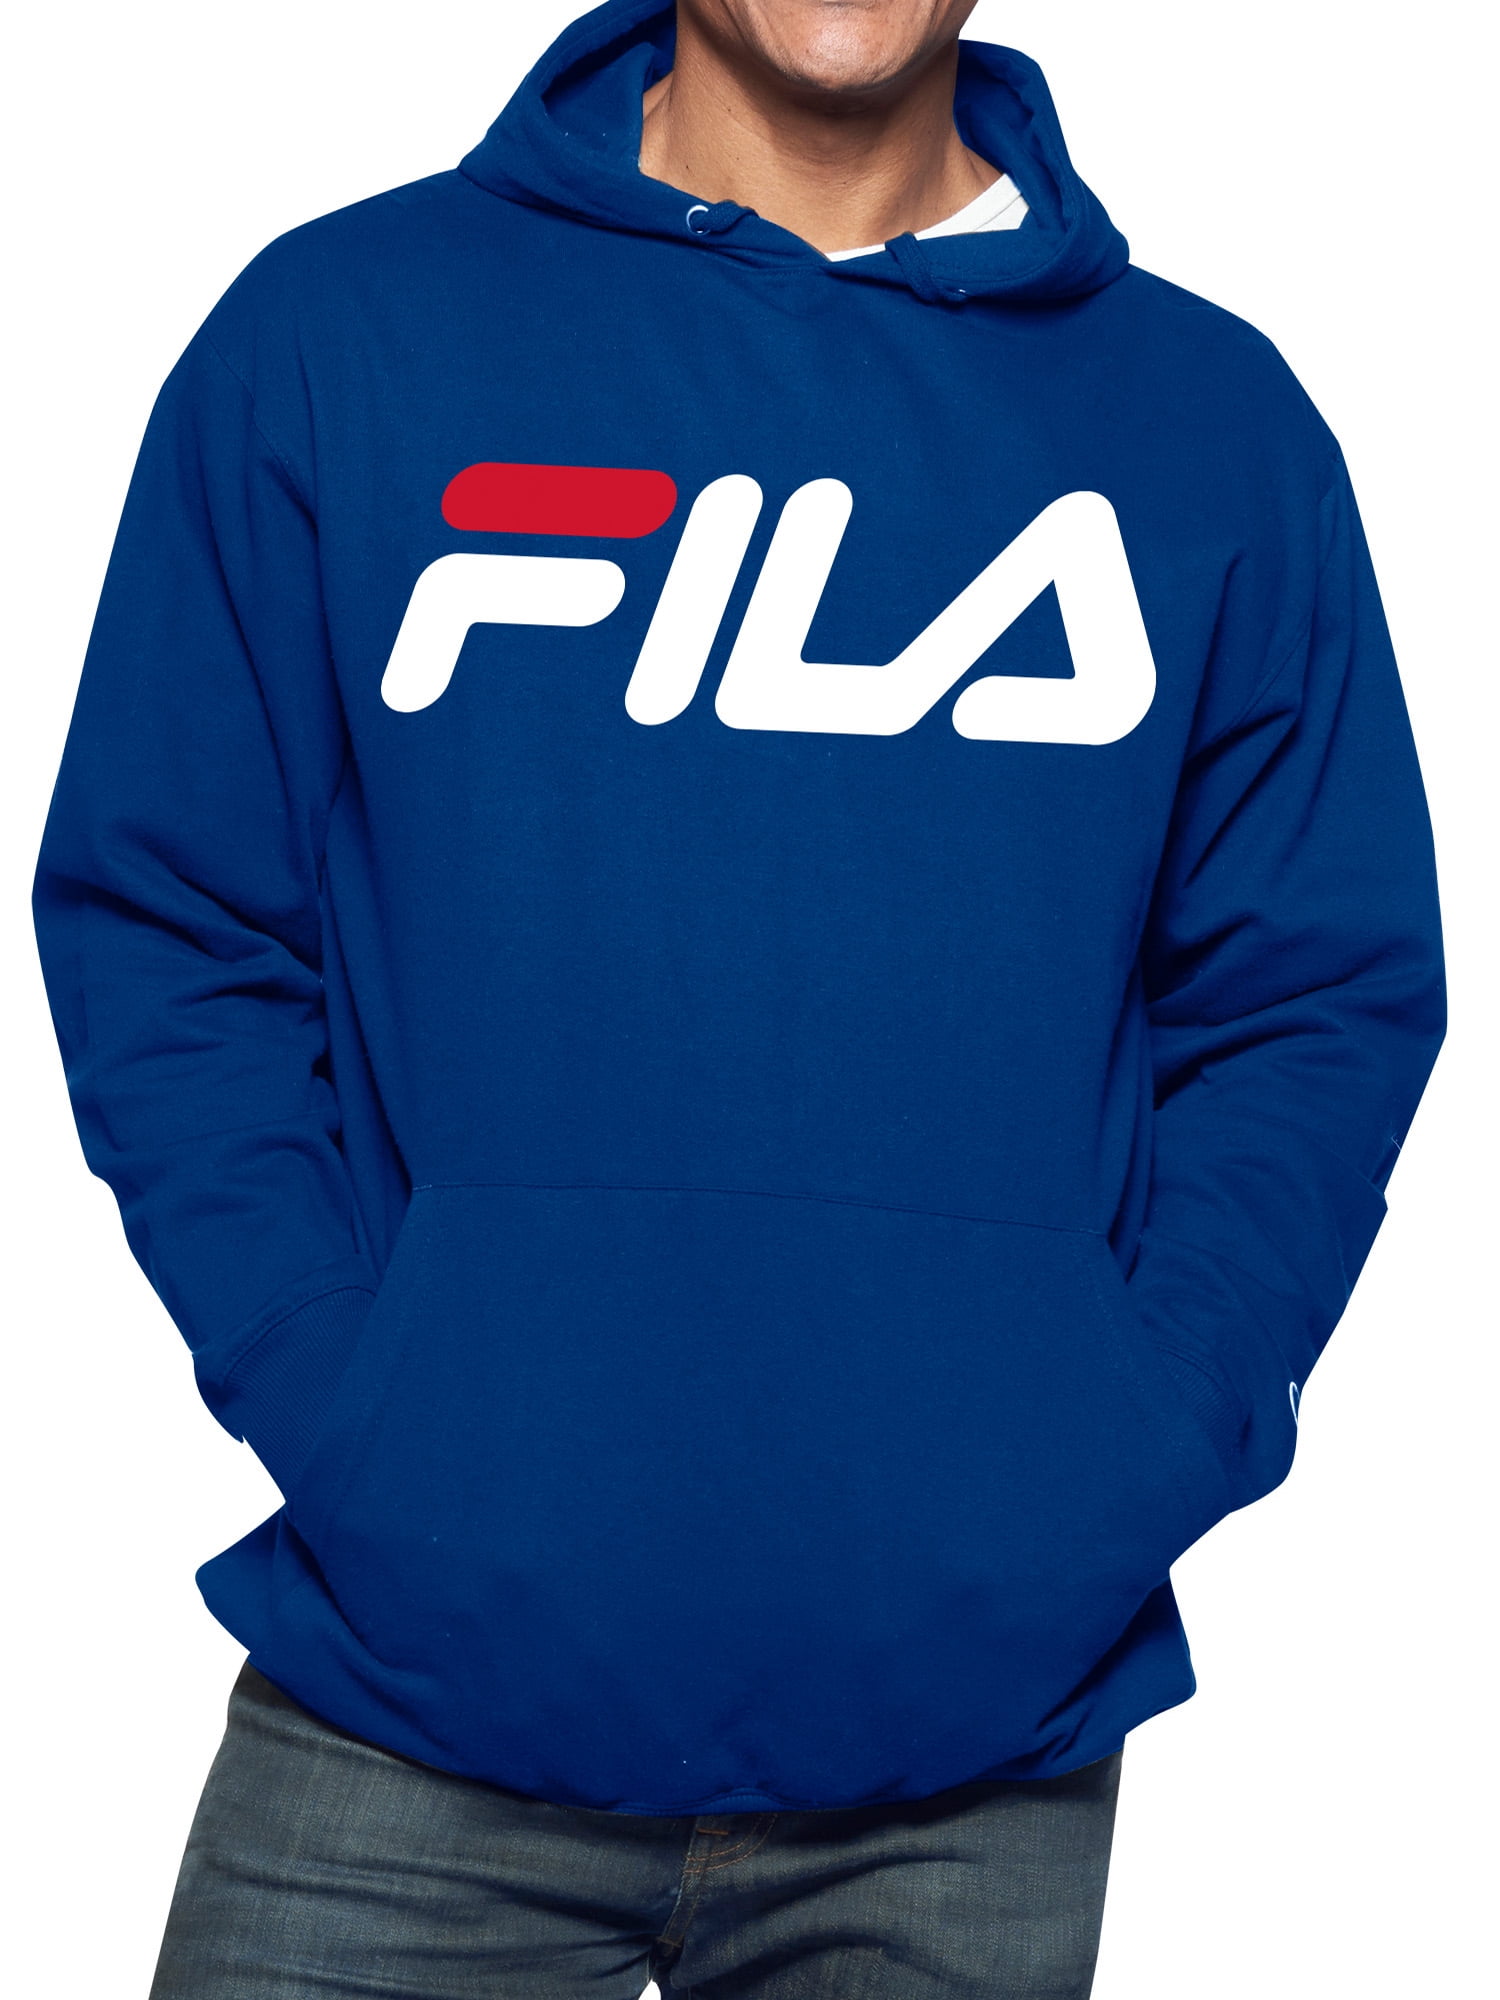 Fila Big & Tall Classic fleece sweatshirt with Graphic design , Sizes XLT-6XL - Walmart.com